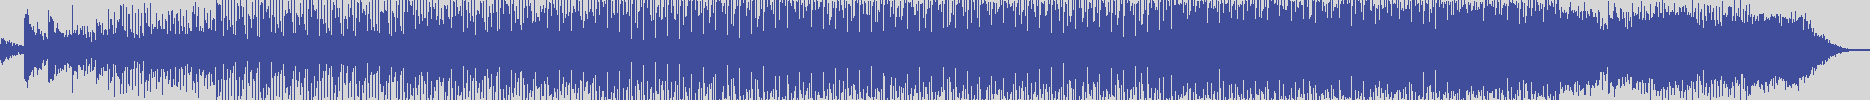 vitti_records [VIT020] Fm Kollective - Apple Corer [Original Mix] audio wave form